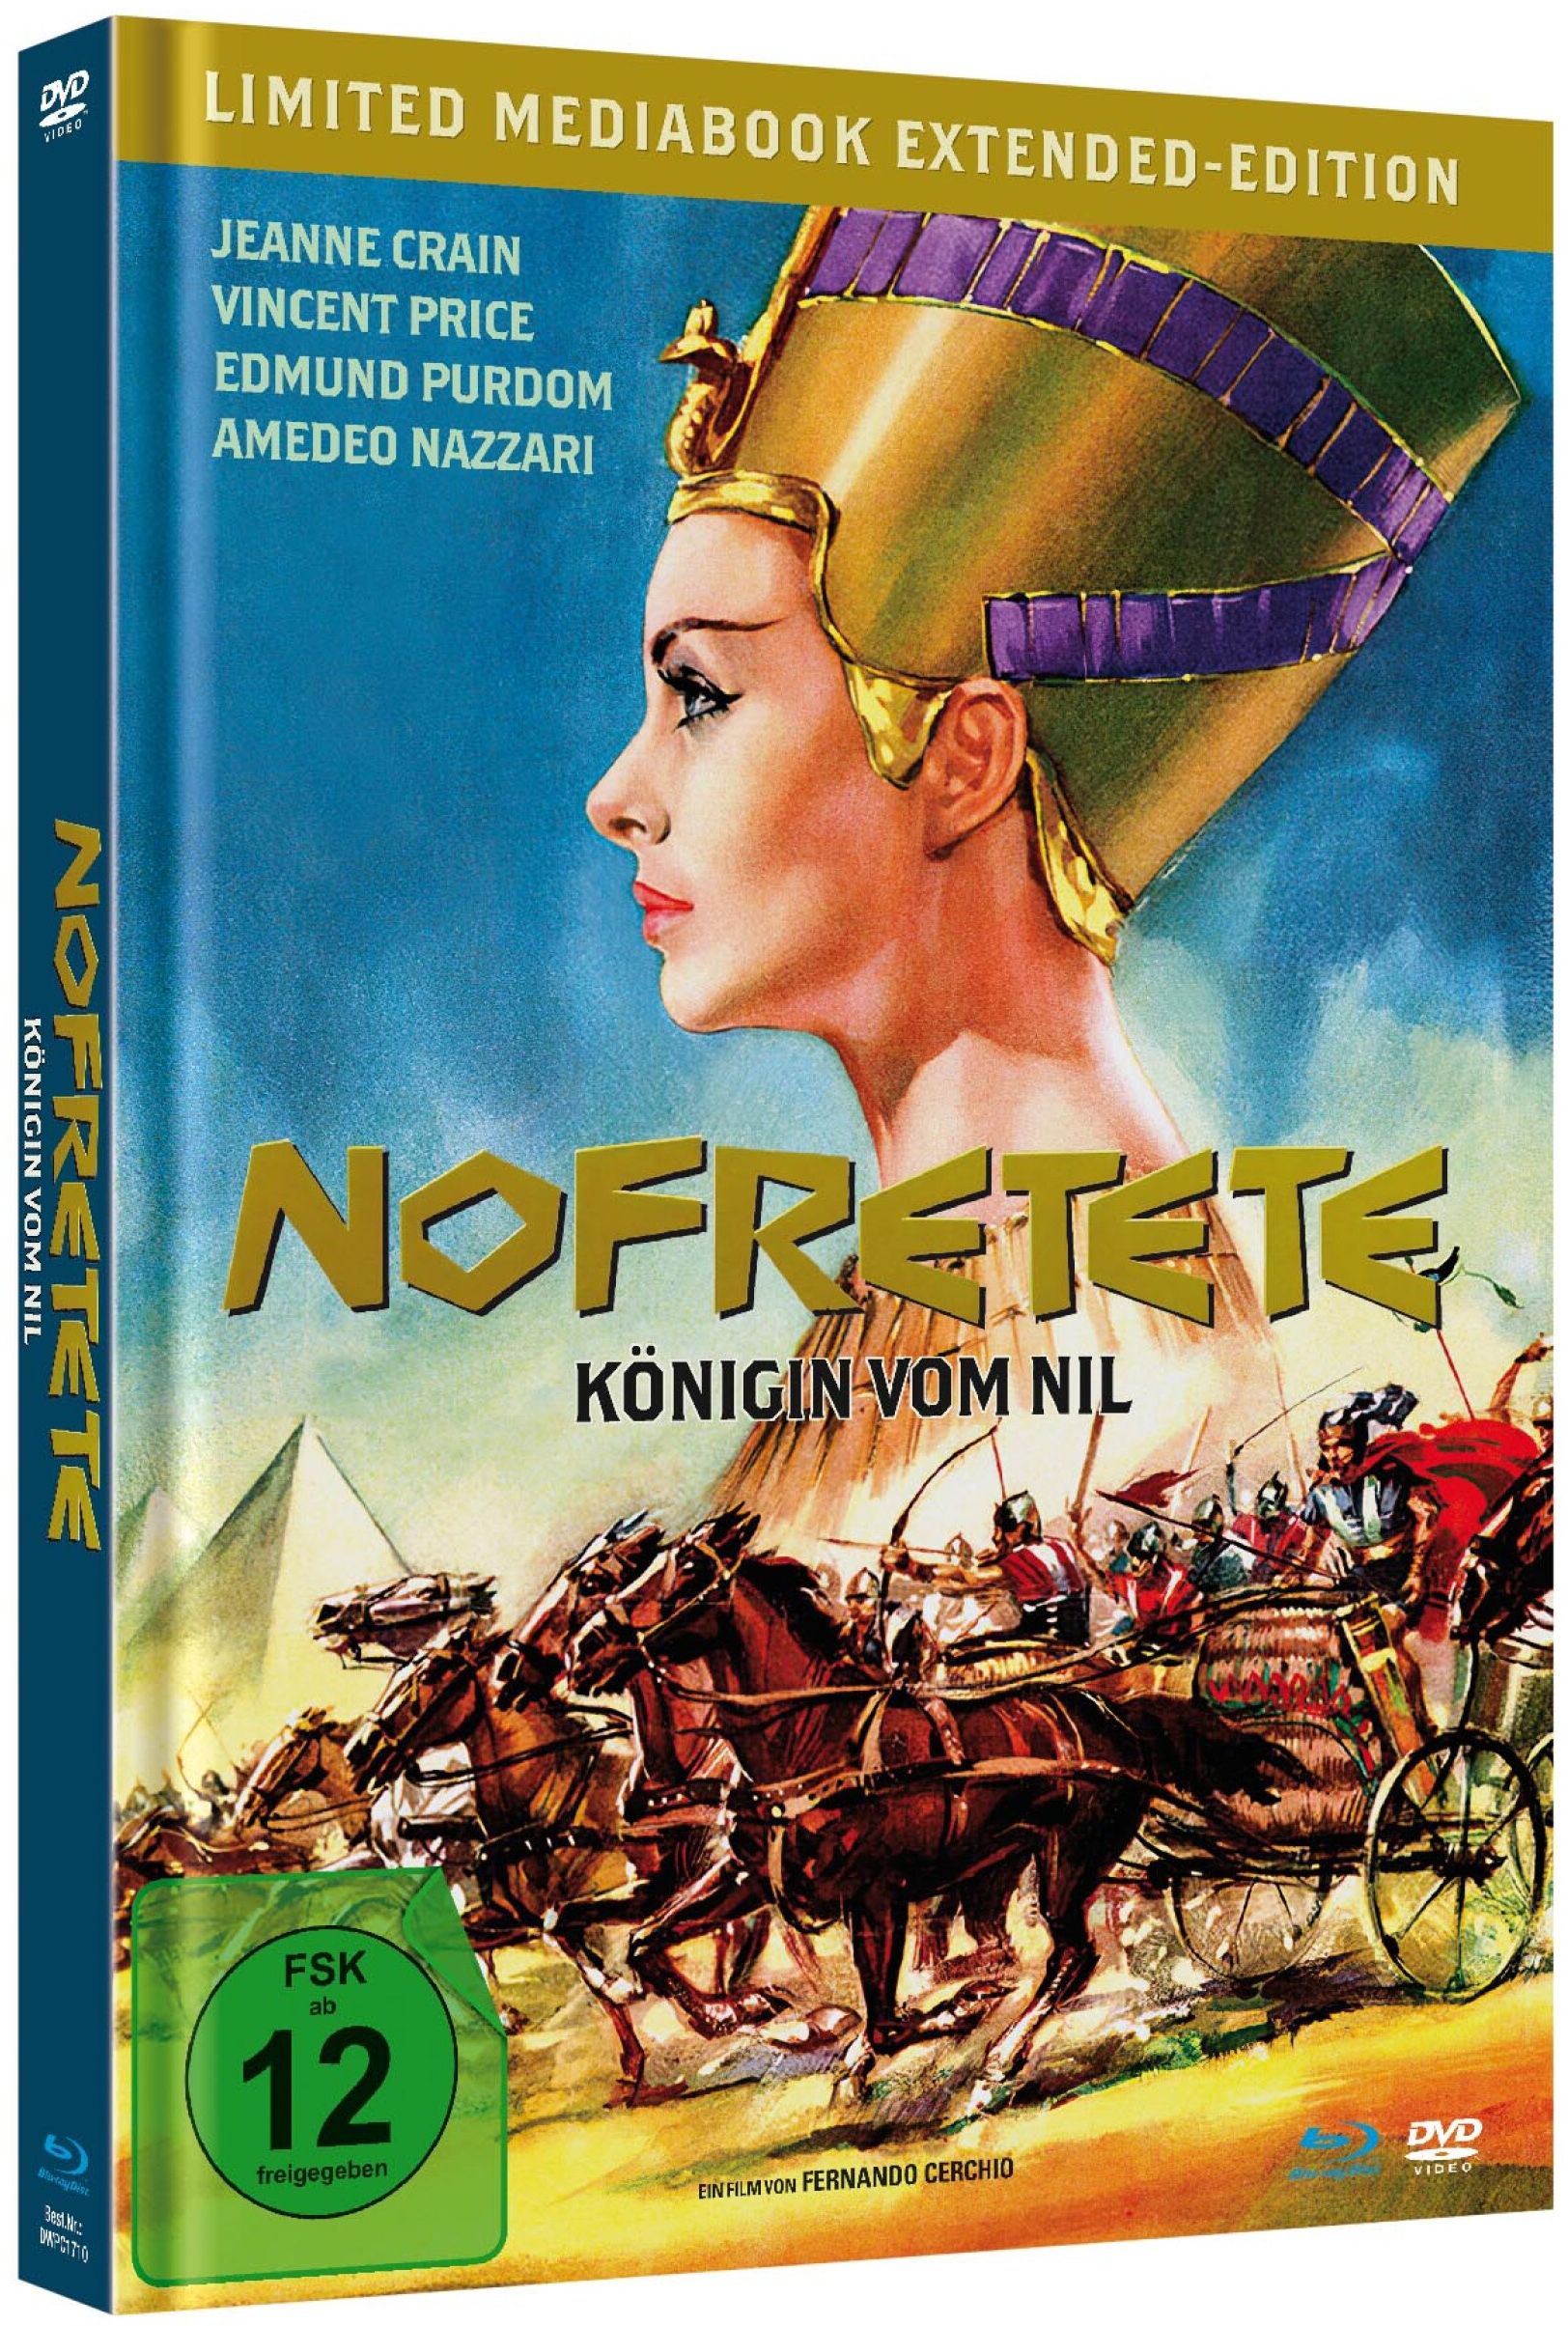 Nofretete - Königin vom Nil (Lim. Extended-Edition Mediabook) (DVD + BLURAY)